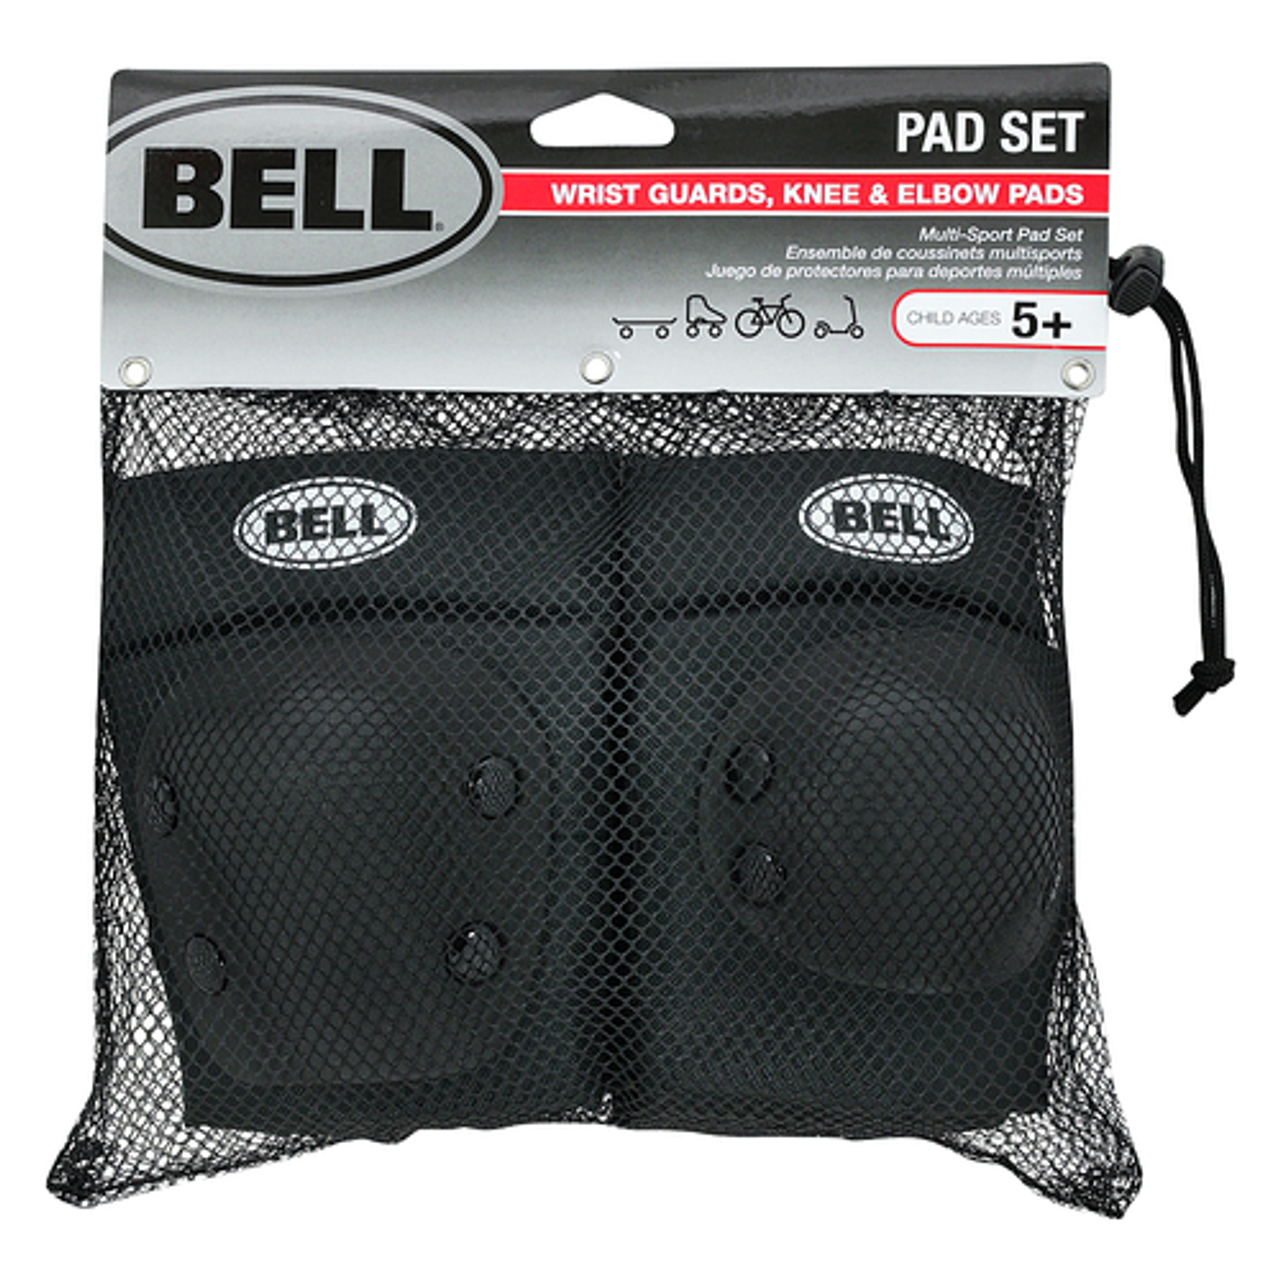 Bell - Child Pad Set